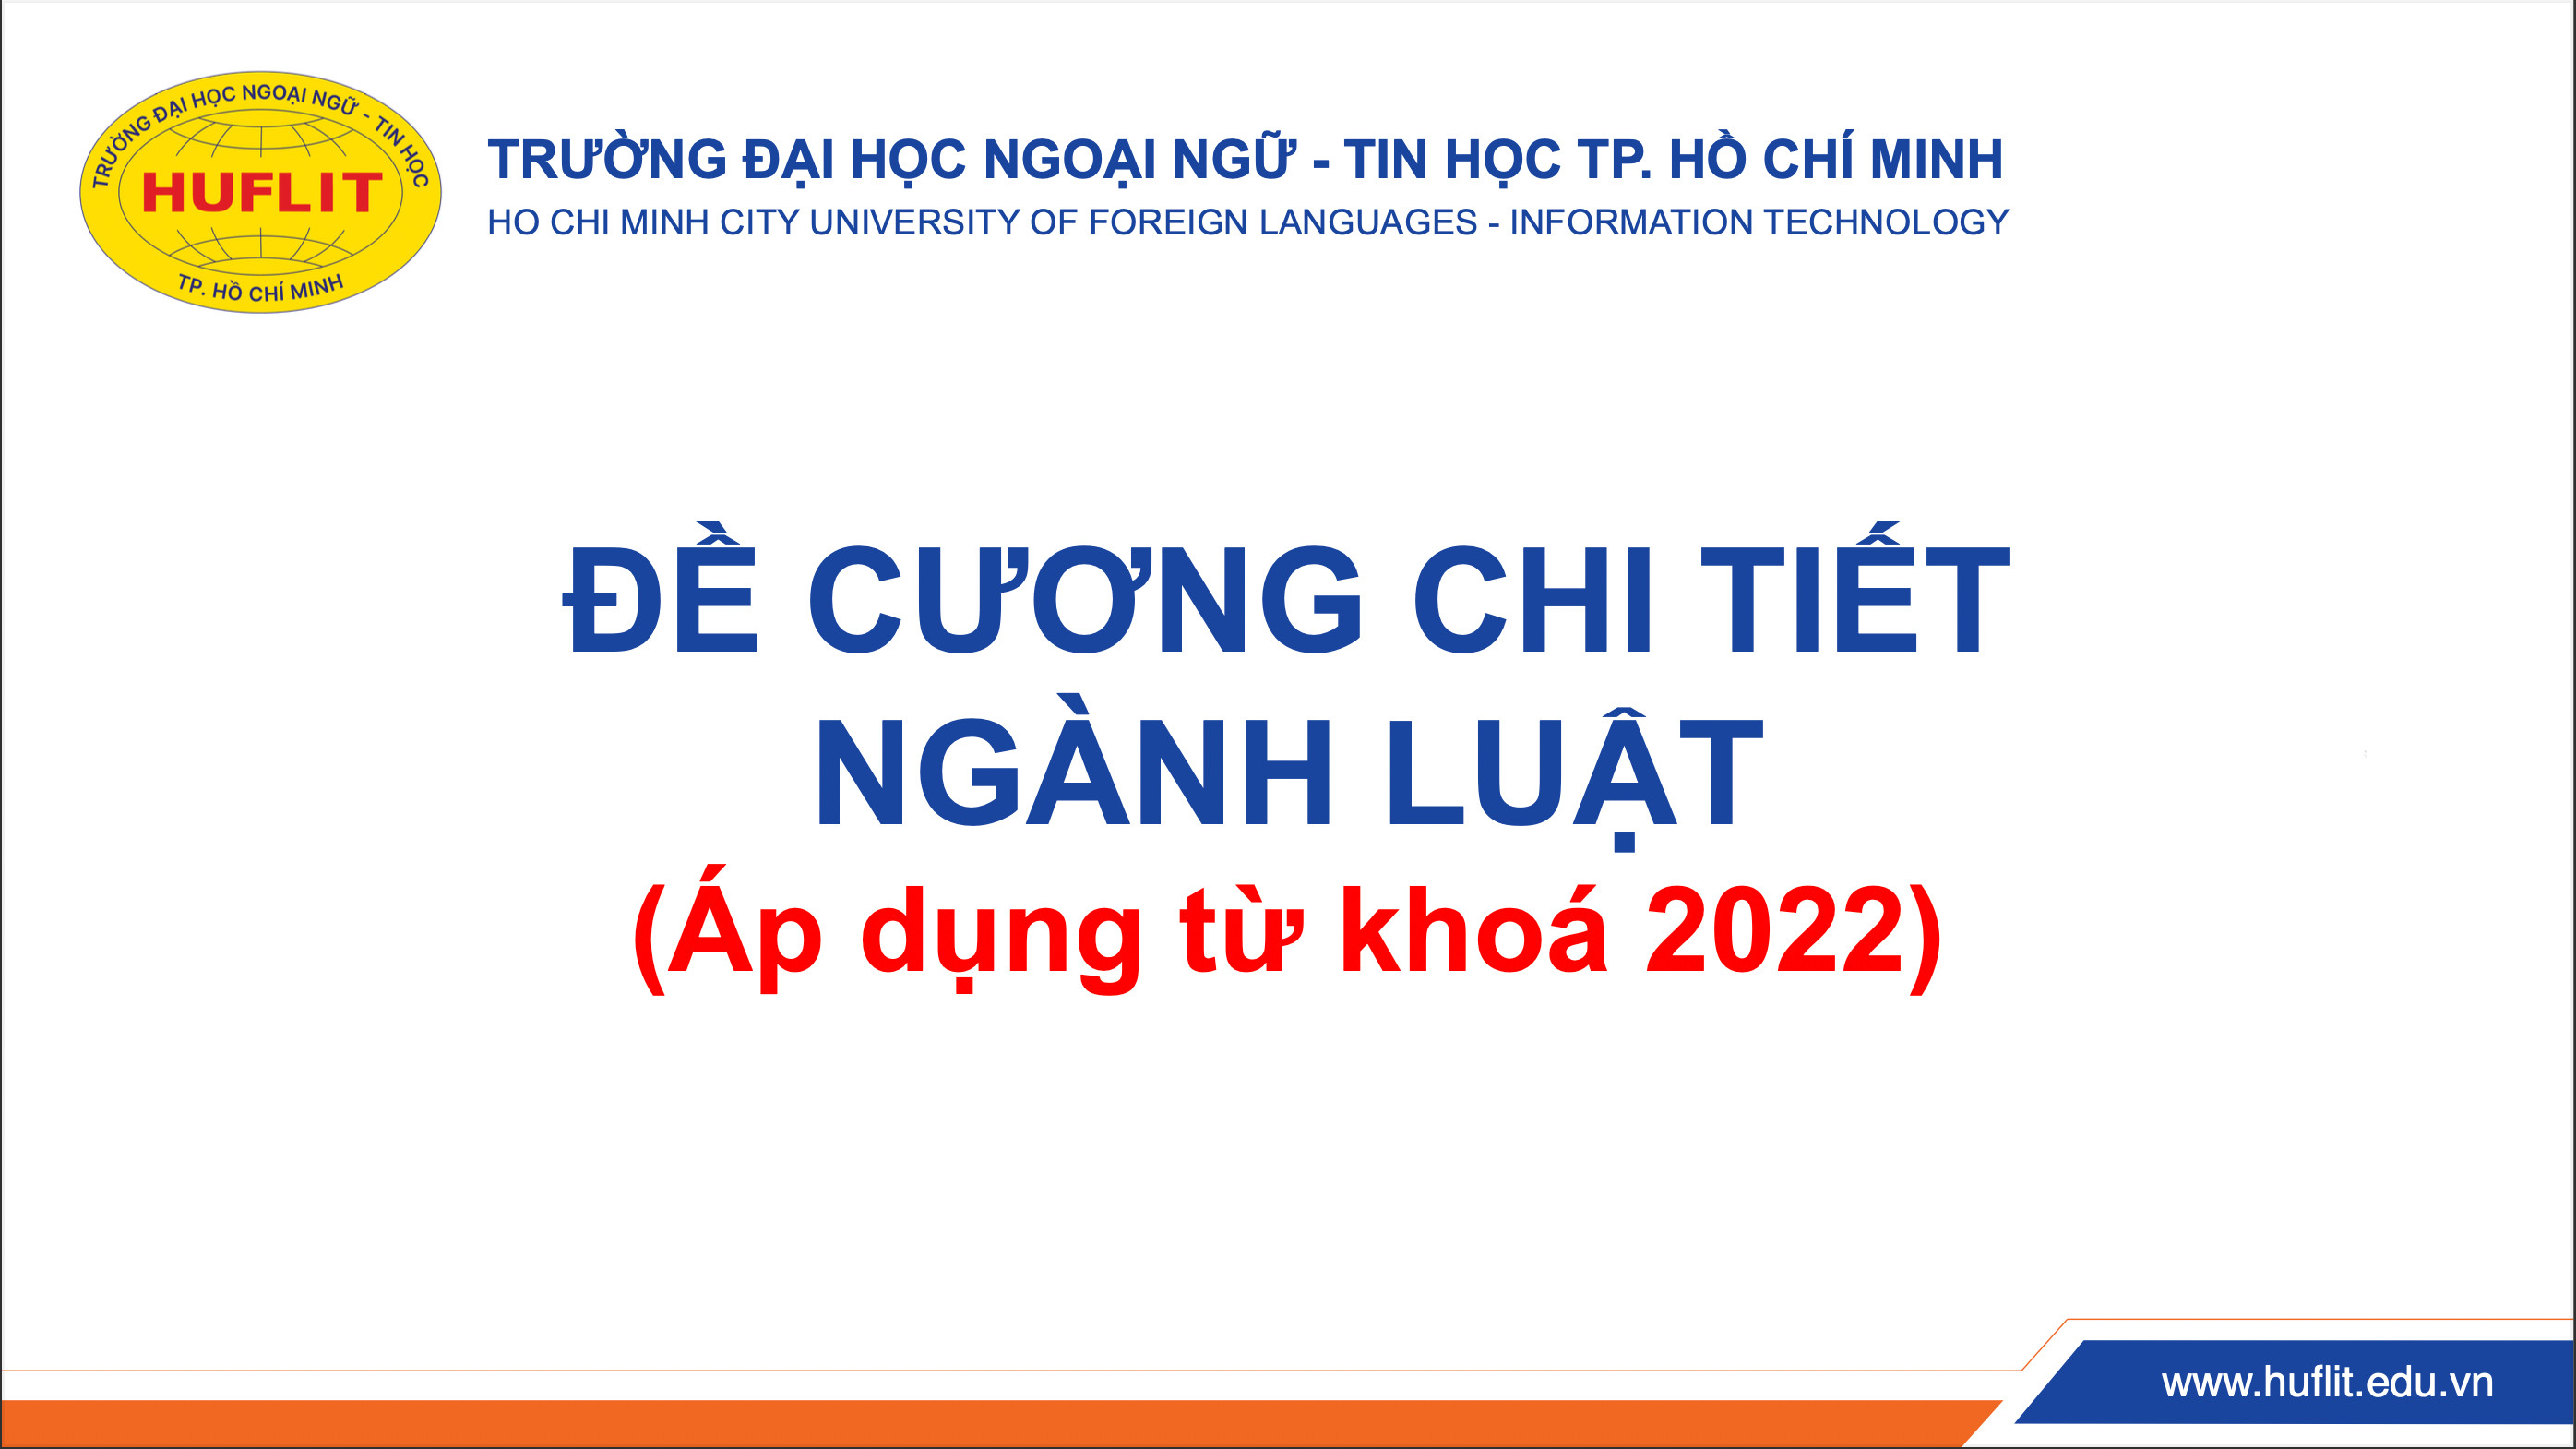 DE CUONG CHI TIET NGANH LUAT 2022